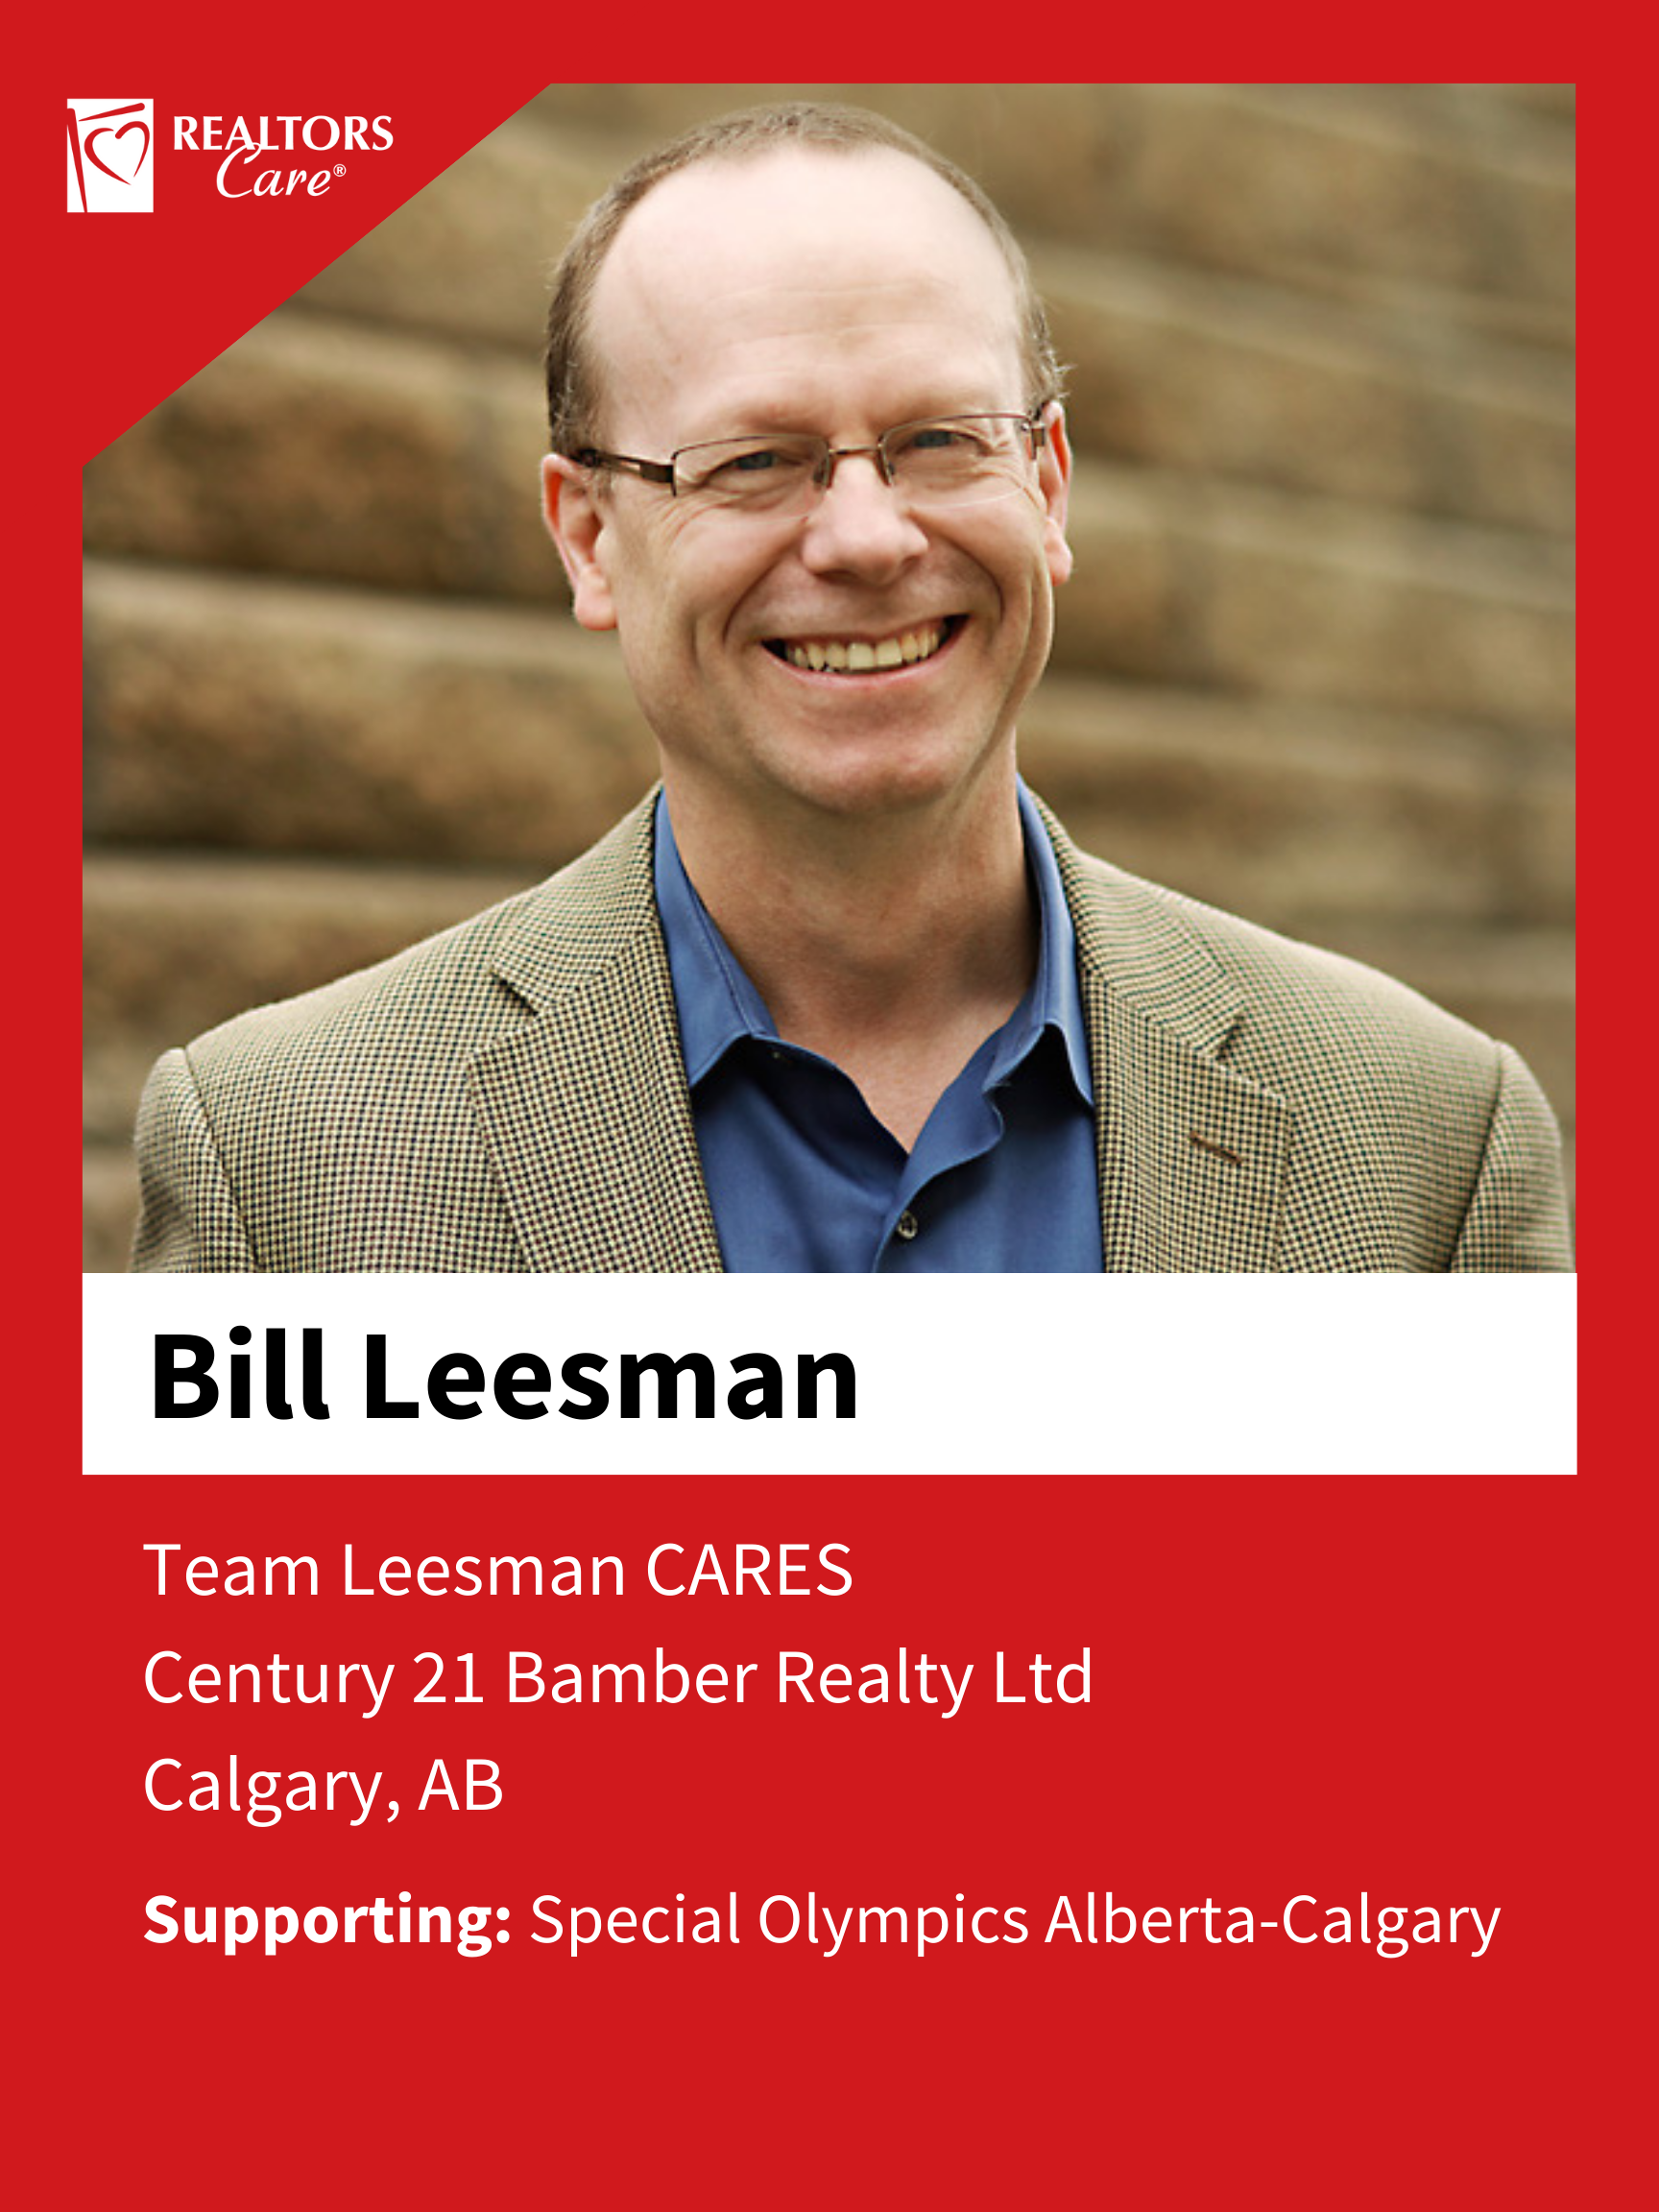 Bill Leesman
Calgary	AB
